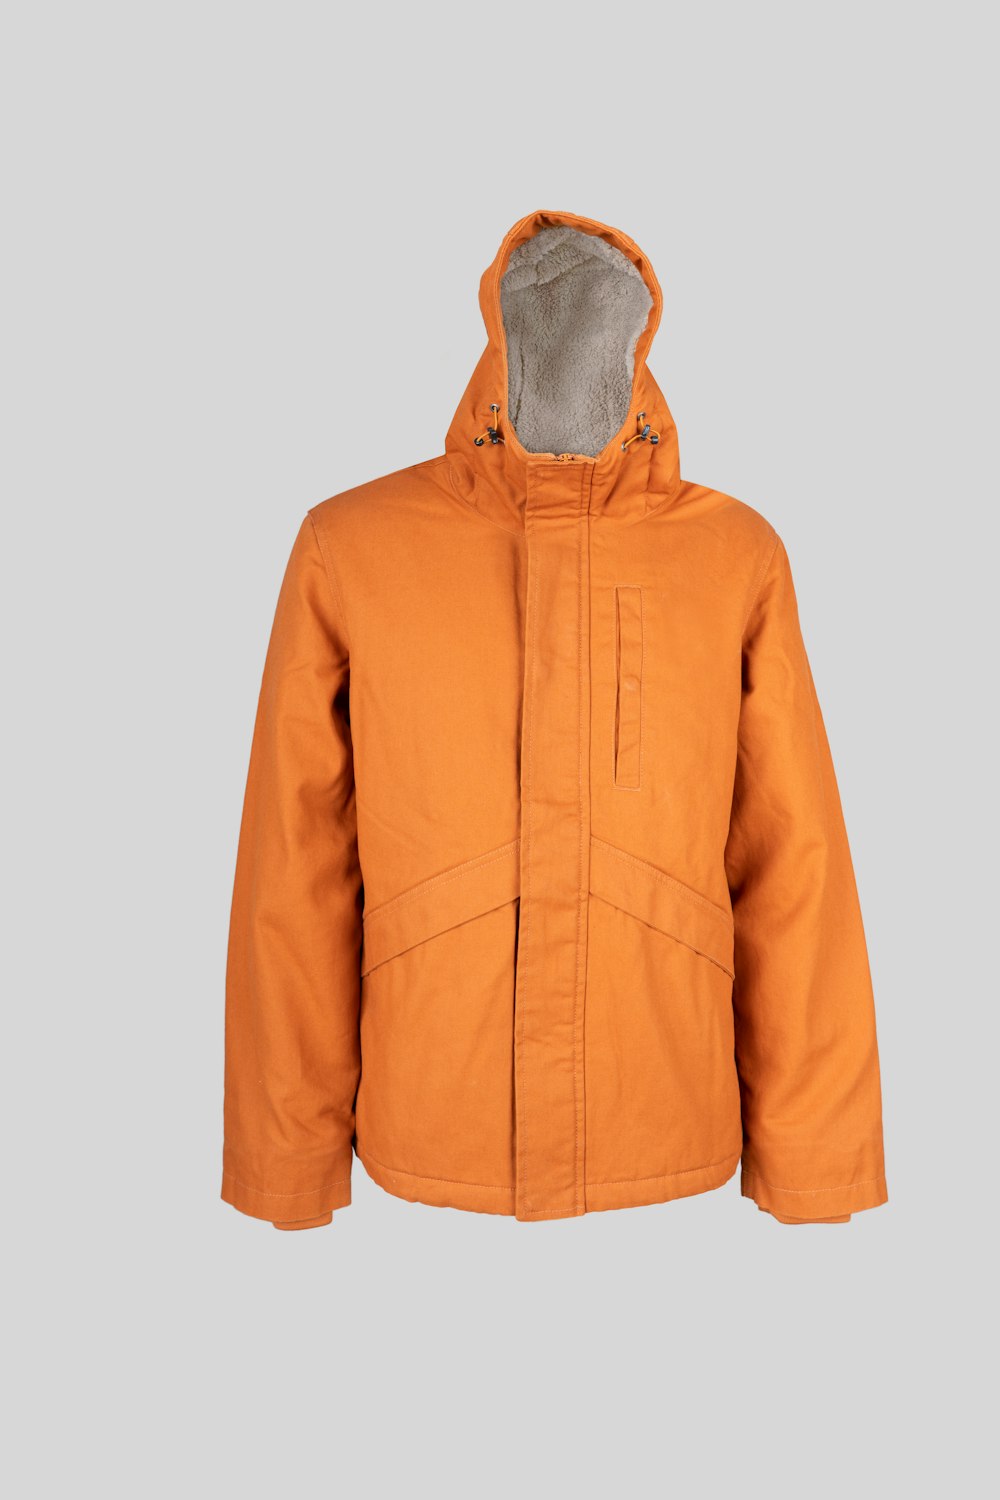 orange zip up hoodie jacket photo – Free Apparel Image on Unsplash